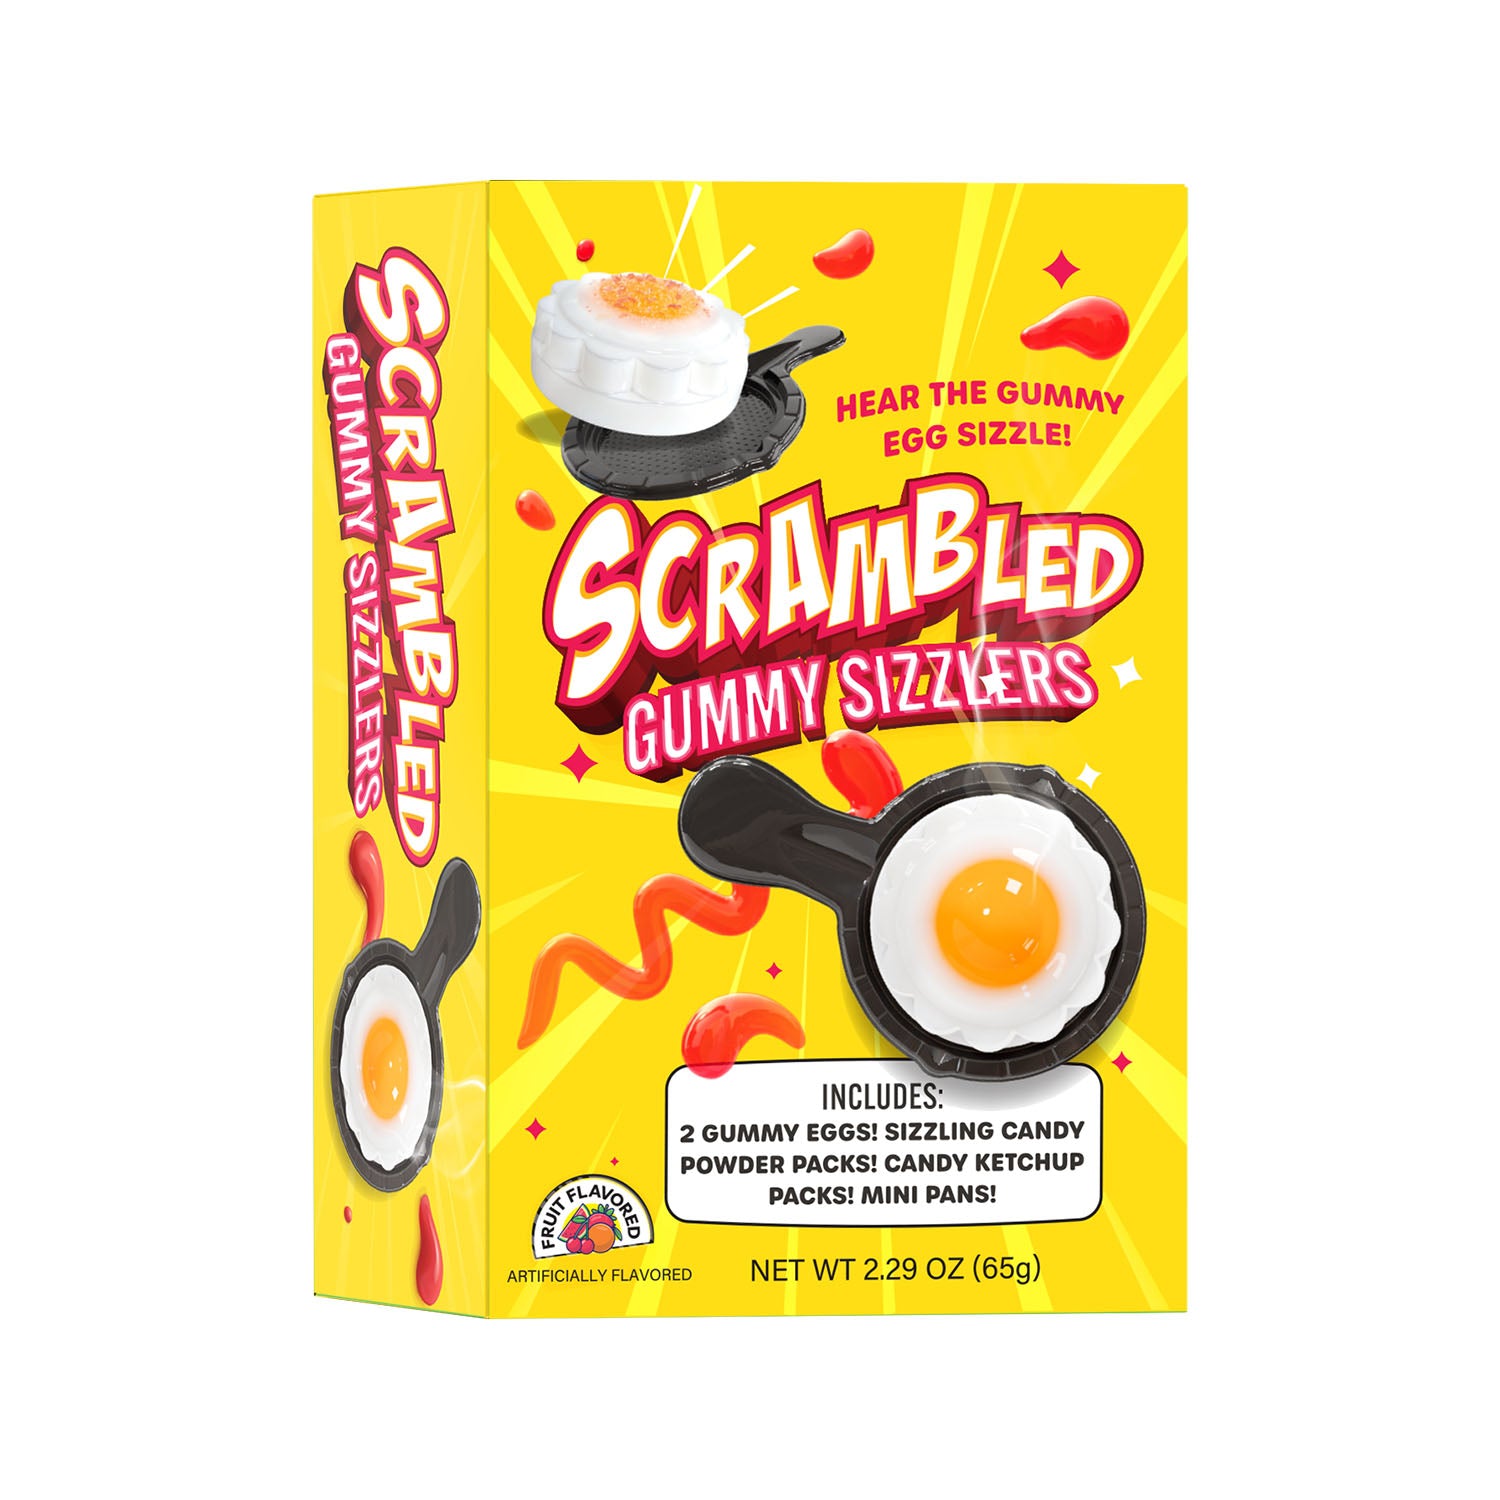 That's Sweet! - Scrambled Gummy Sizzlers - 65g